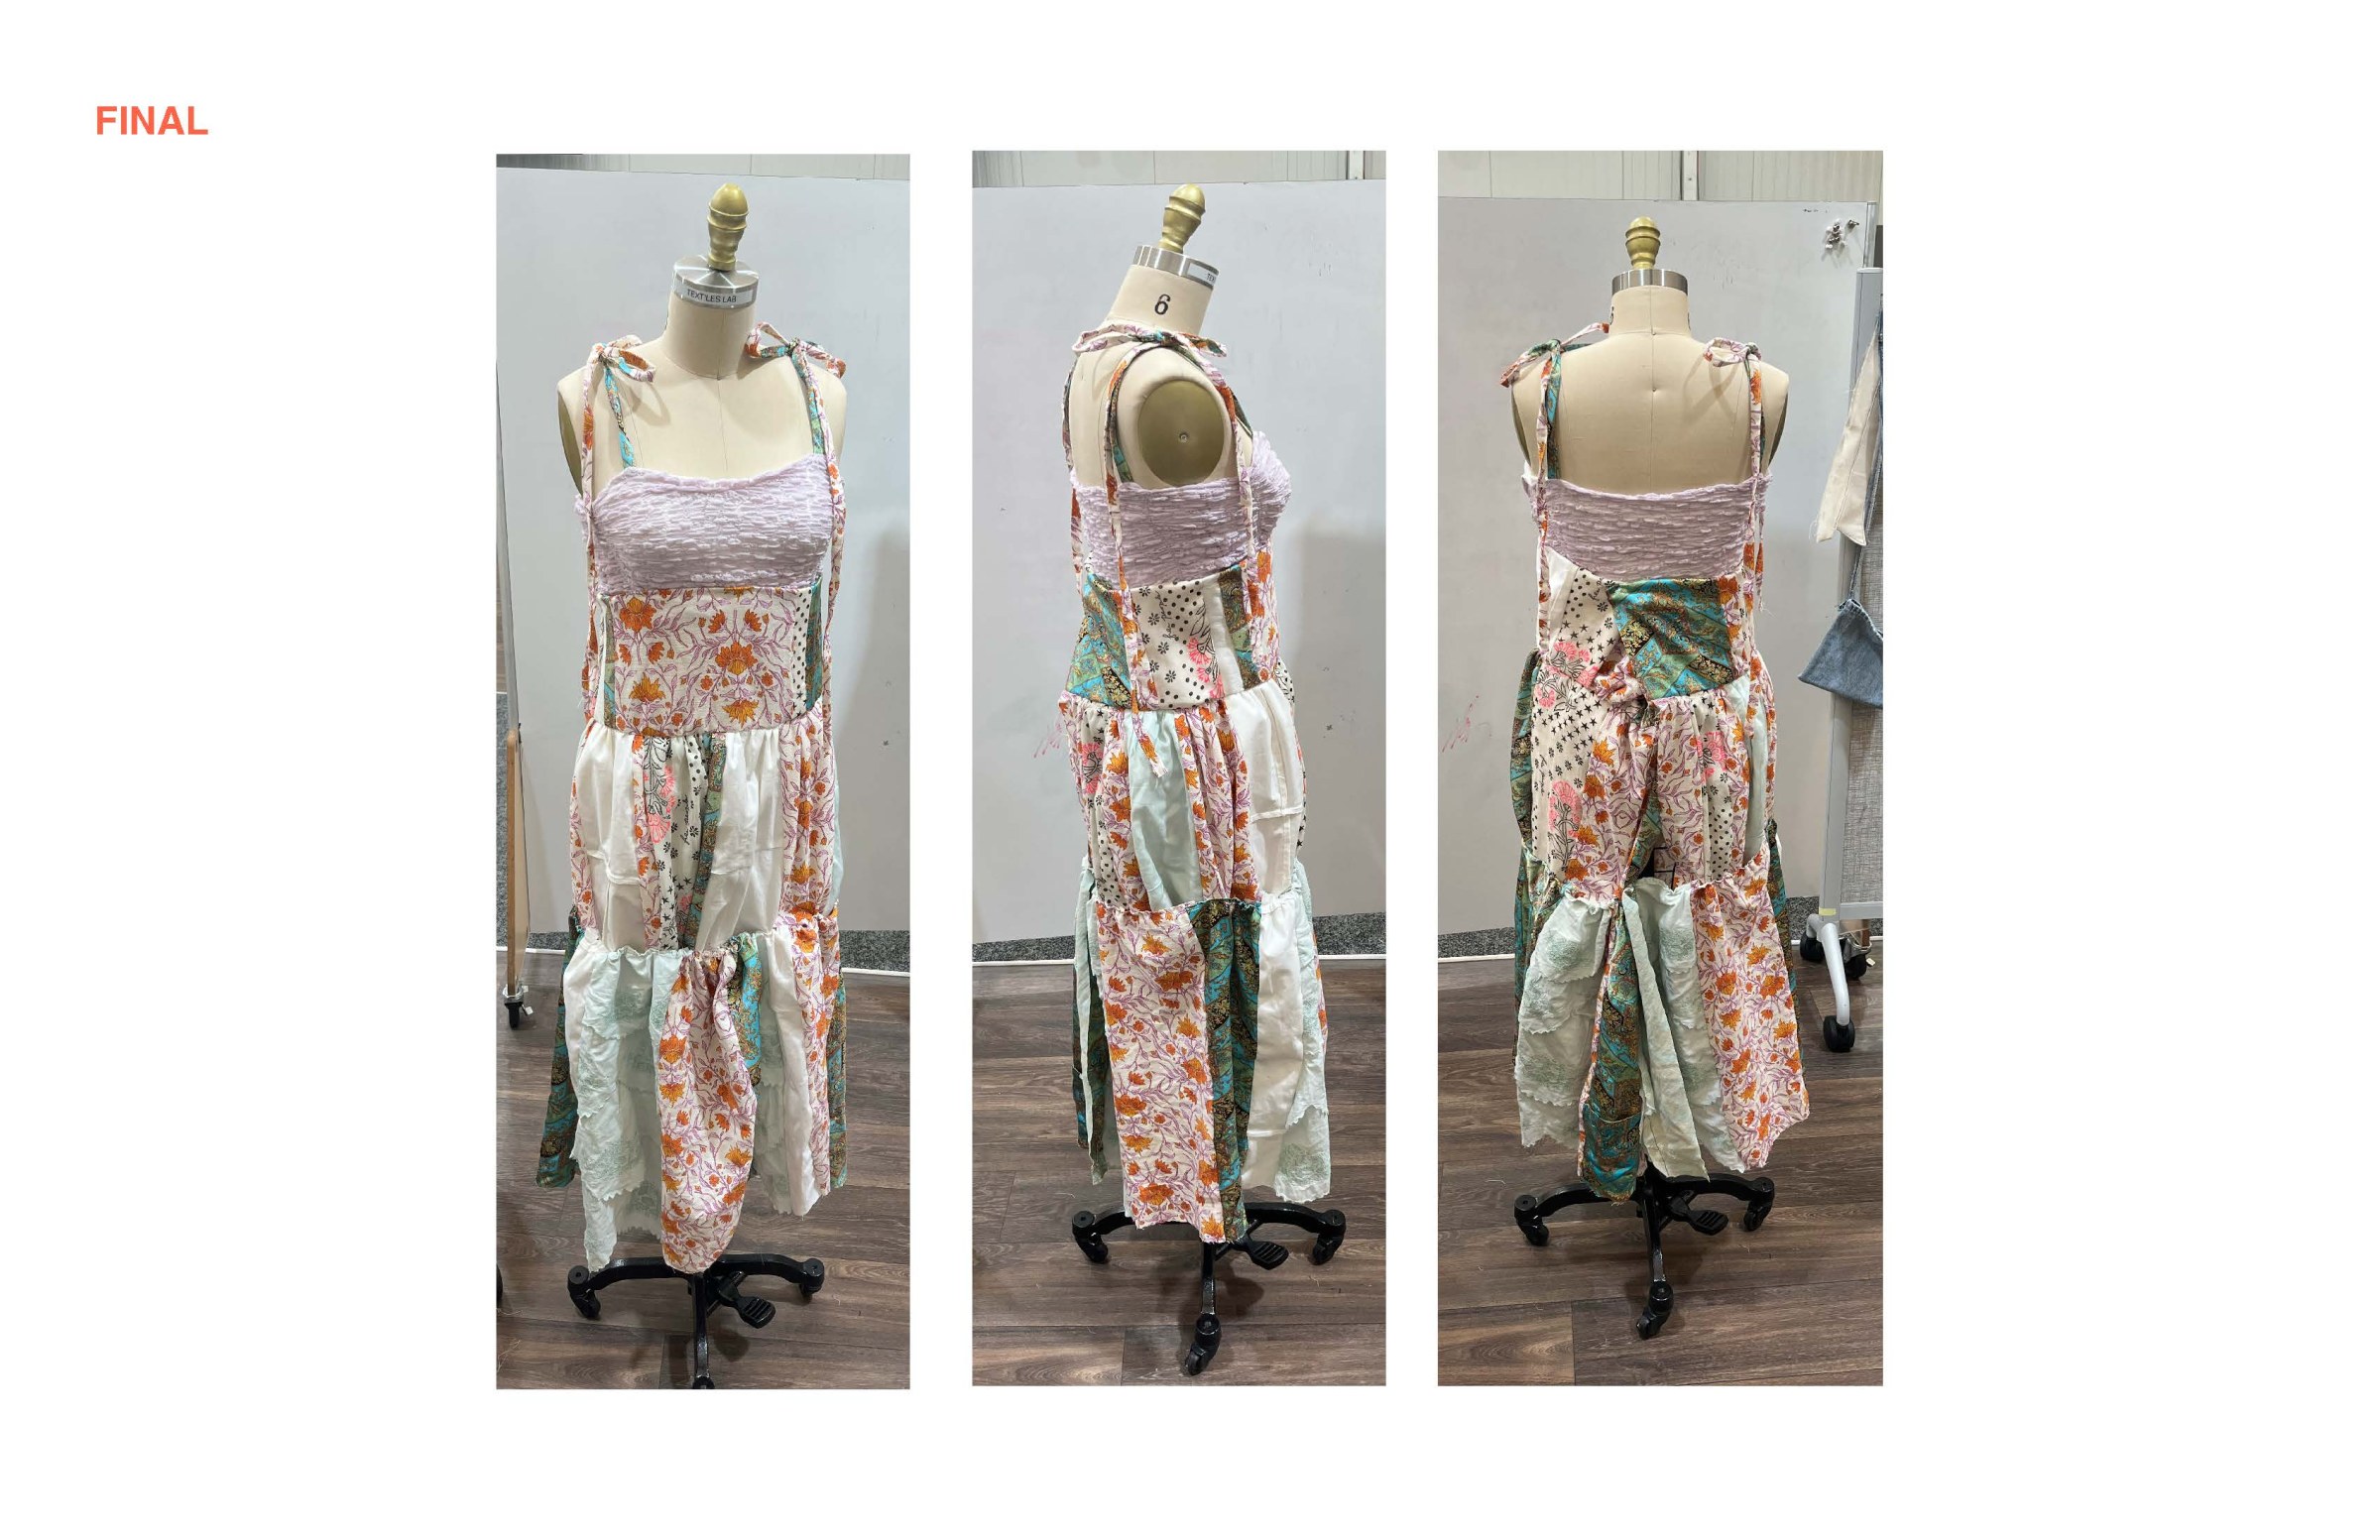 Textile Design Studio student's final dress design